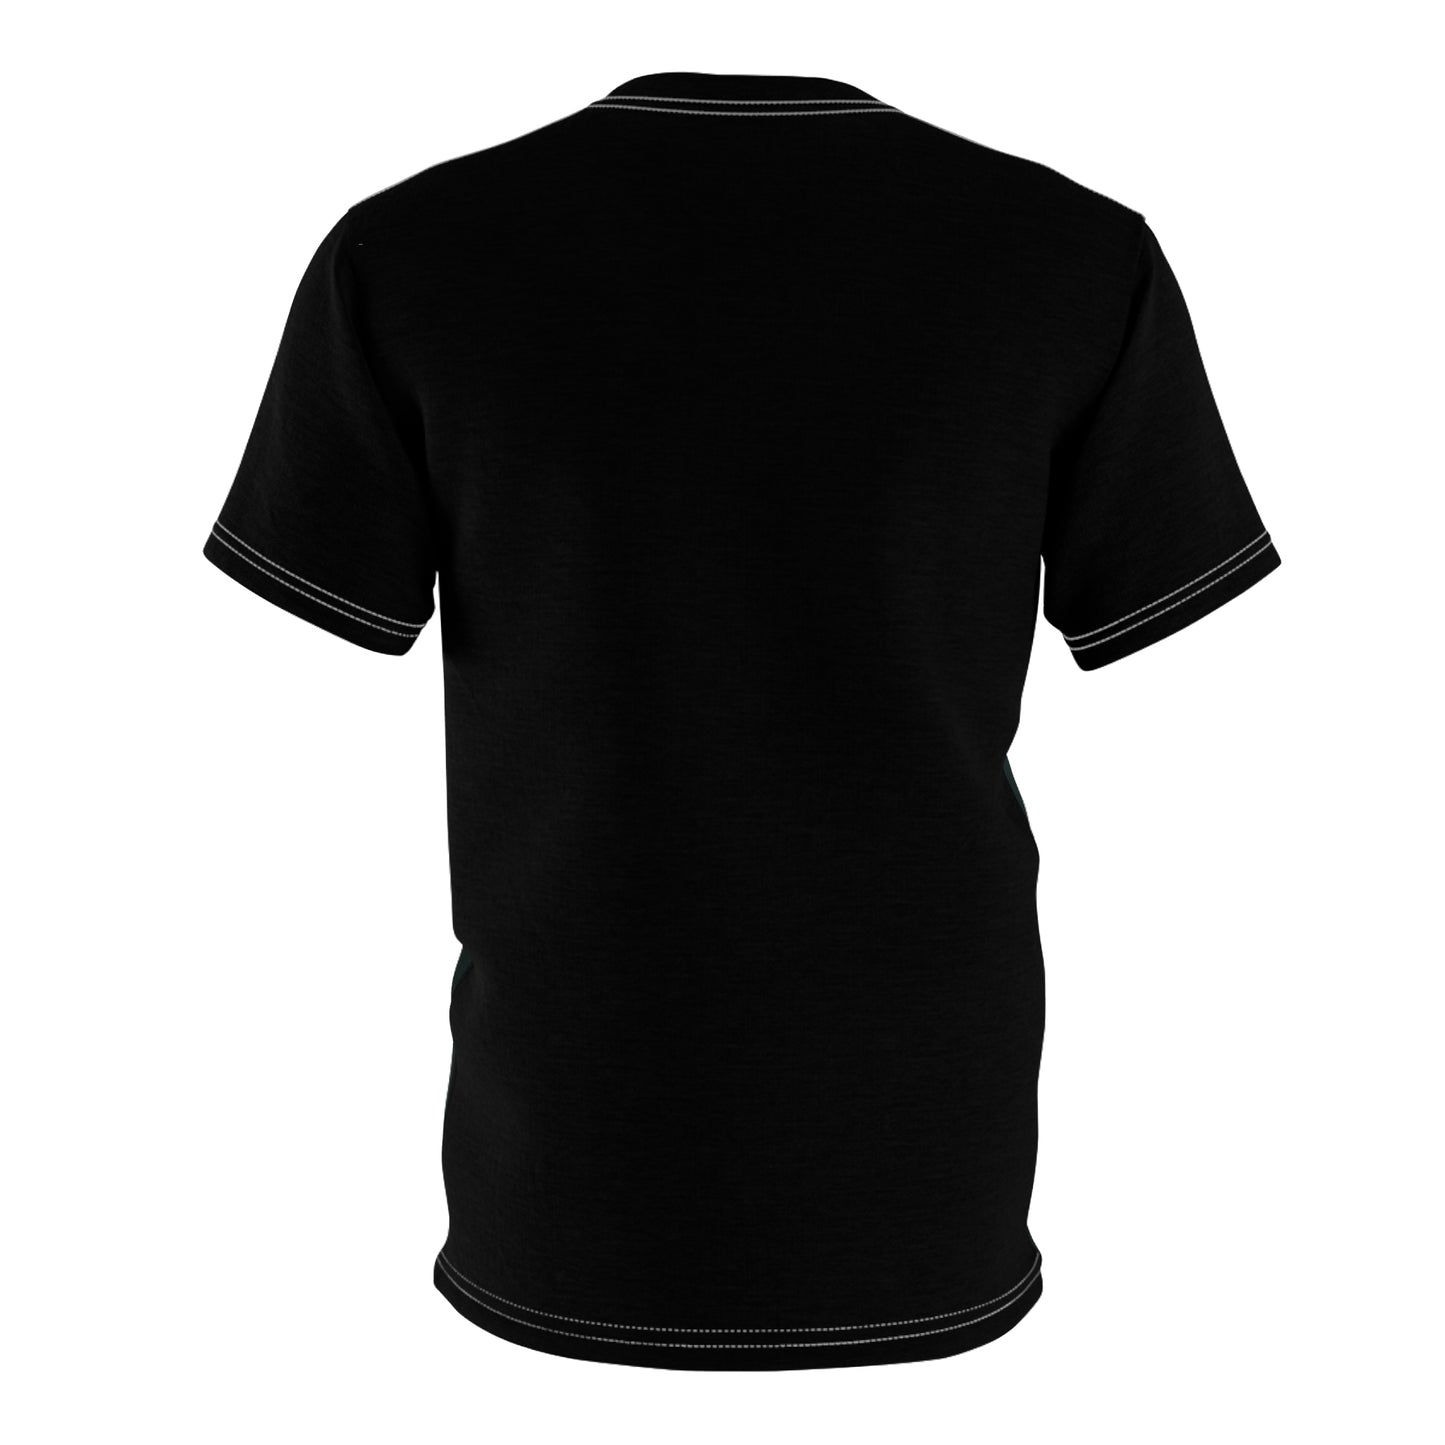 Healing Brian Esseintes - Unisex All-Over Print Cut & Sew T-Shirt